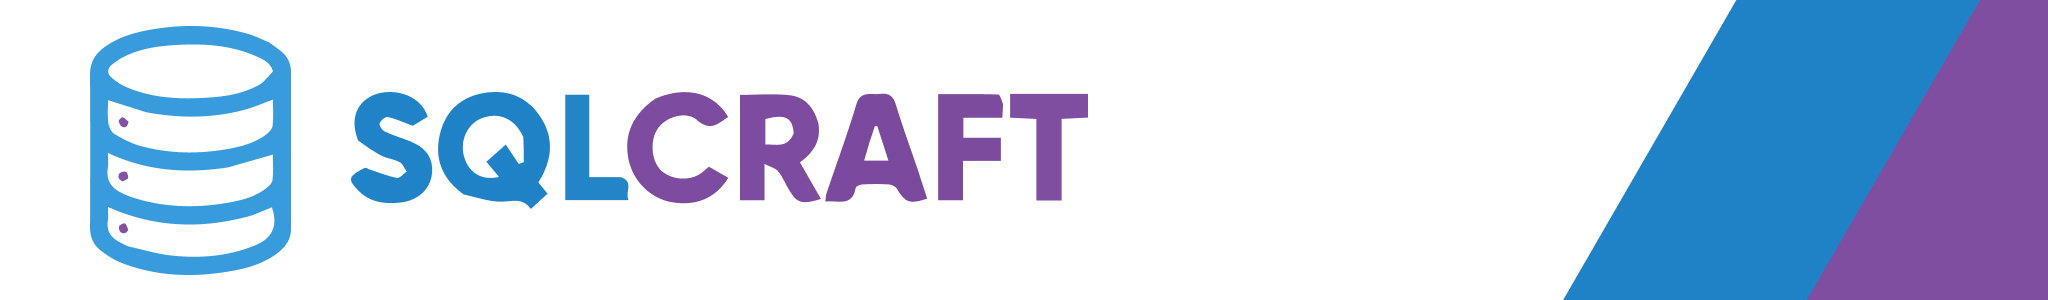 SQLCraft logo